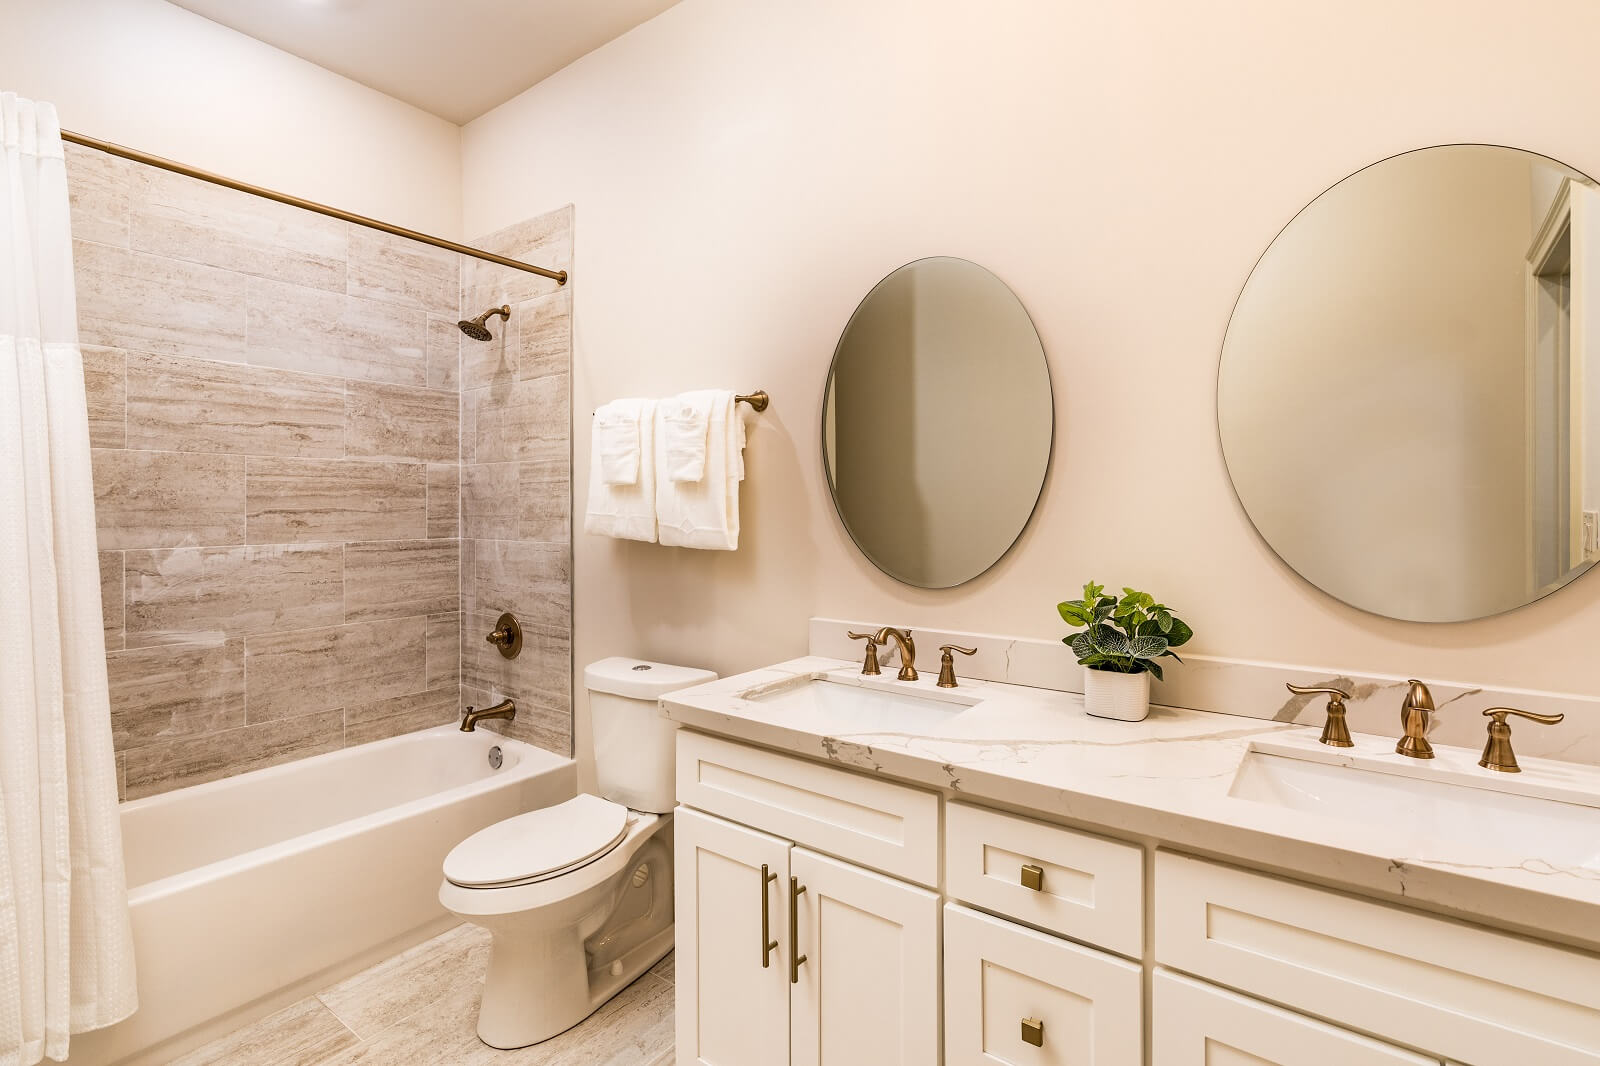 The Alexandre Unit 201 bathroom, a New Orleans luxury rental.